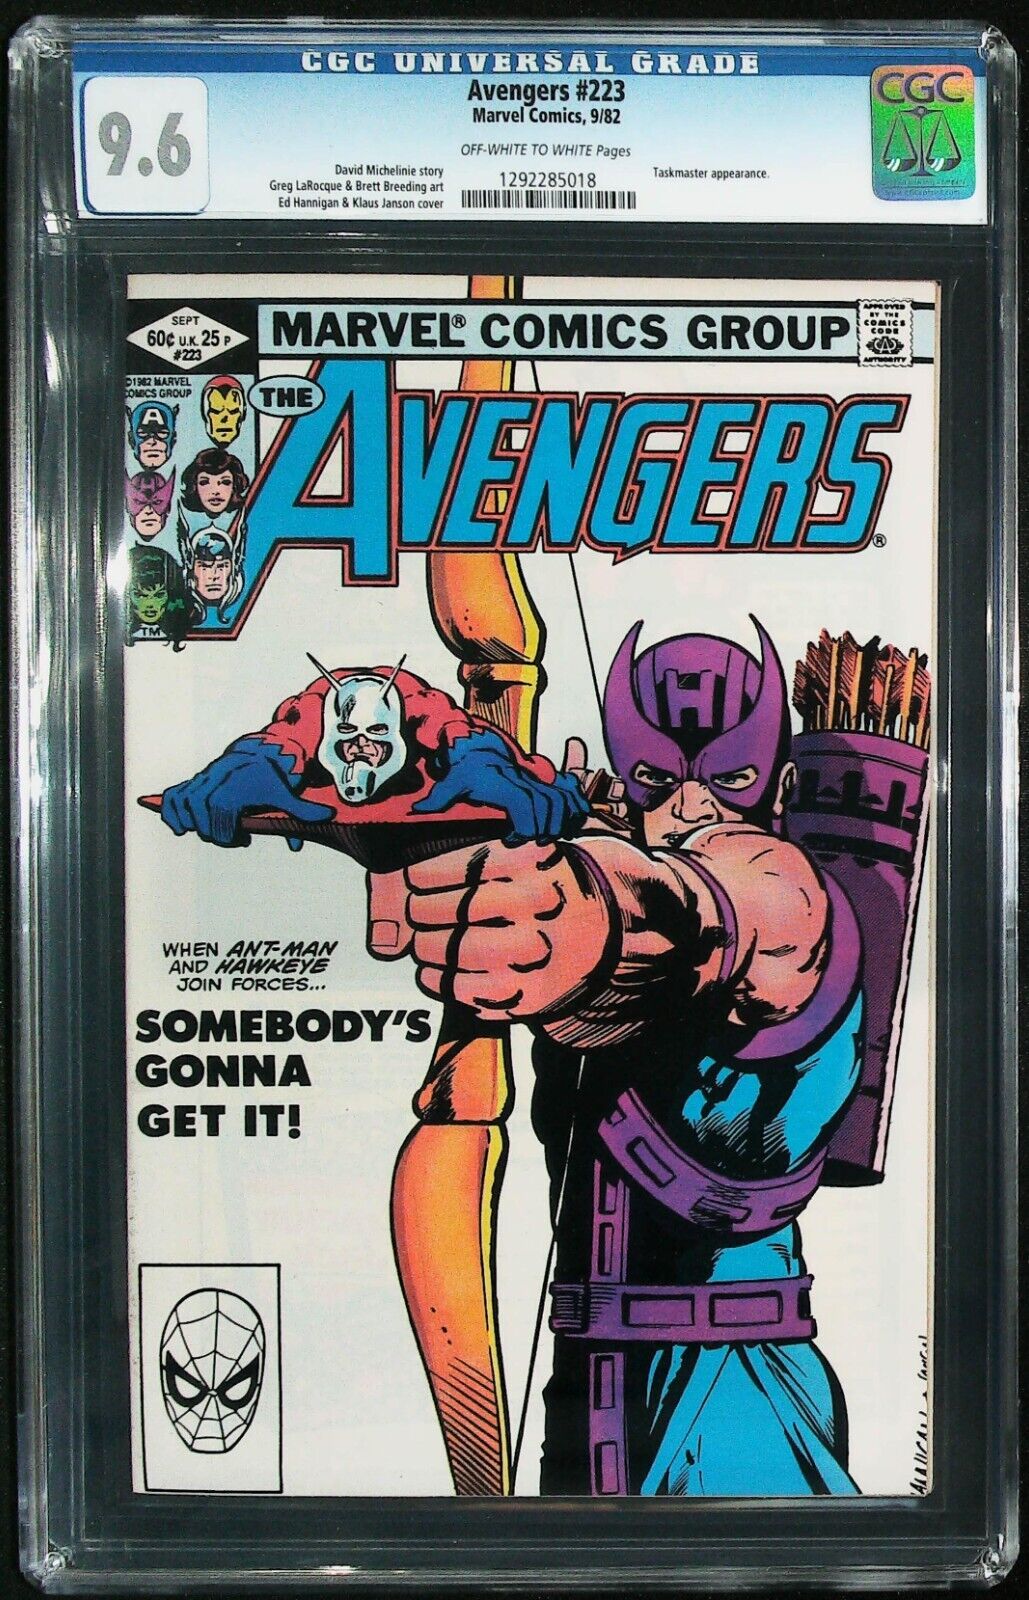 Avengers #223 Vol 1 (1982) - KEY - Taskmaster Appearance- Marvel - CGC Grade 9.6